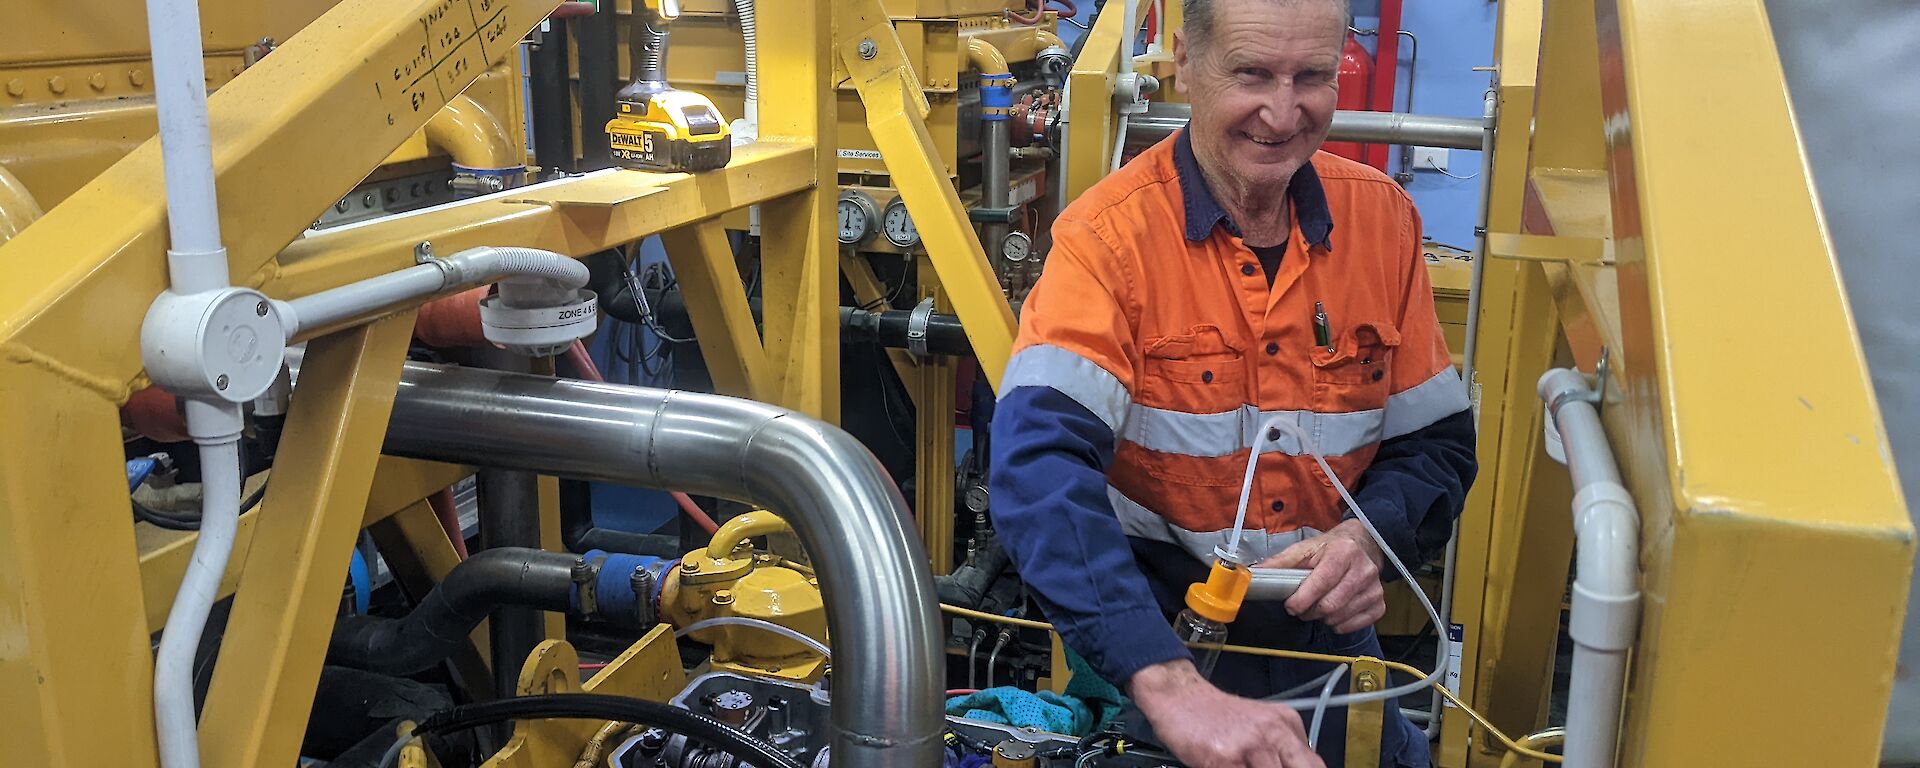 A man in hi viz works on a yellow generator